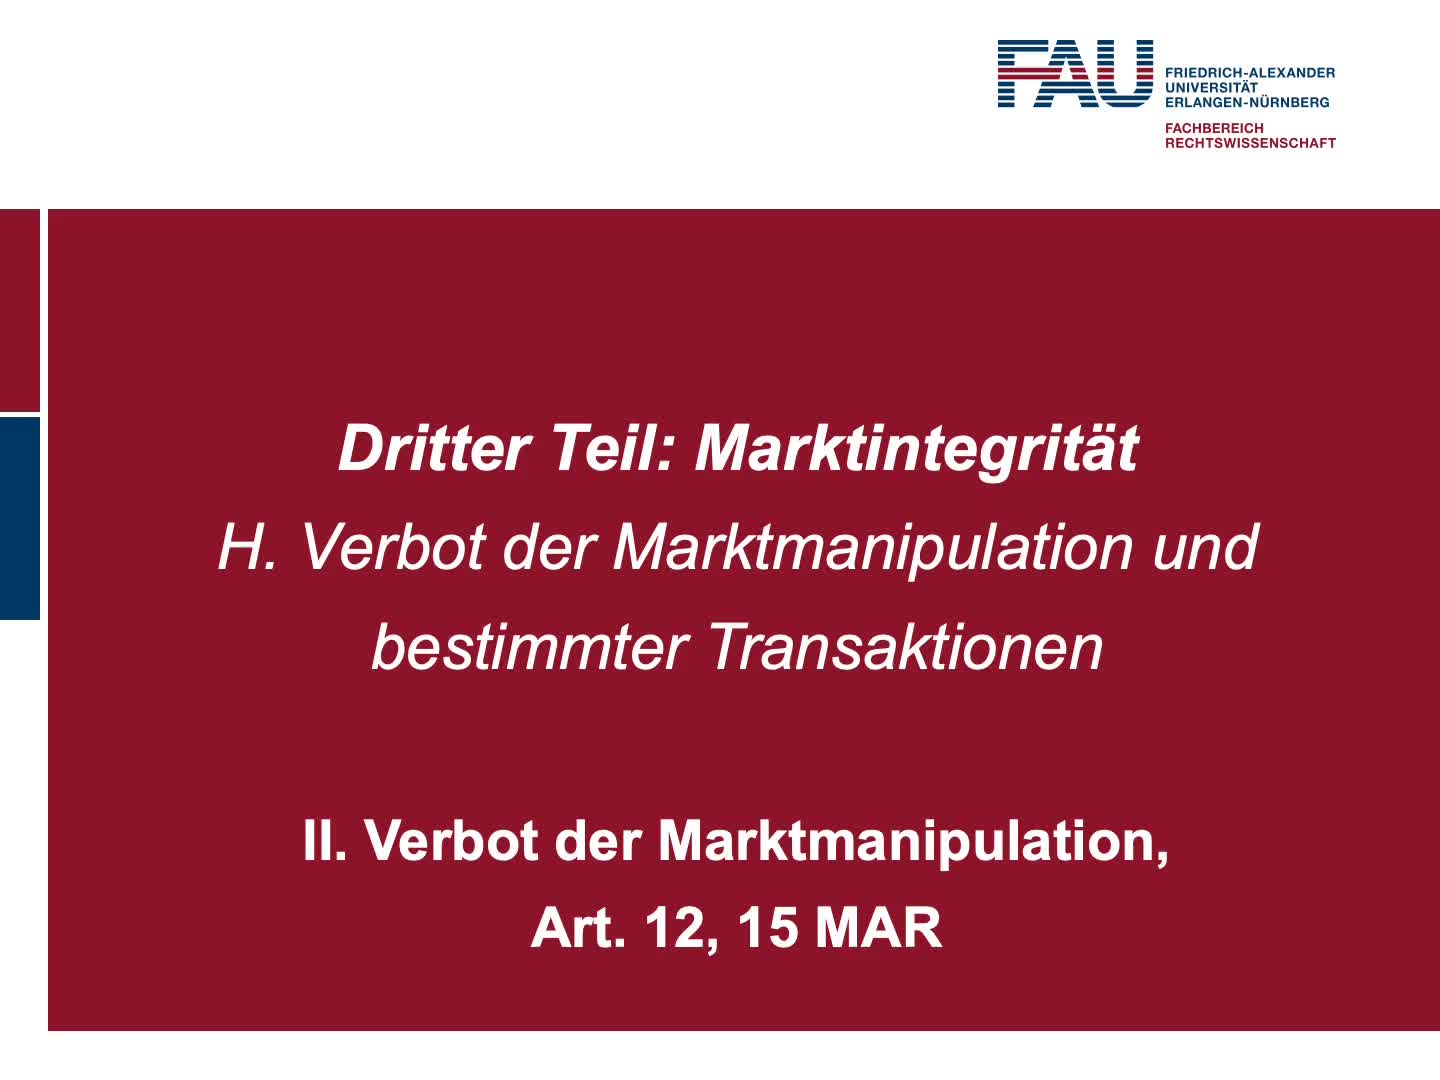 Verbot der Marktmanipulation, Art. 12, 15 MAR (6) preview image